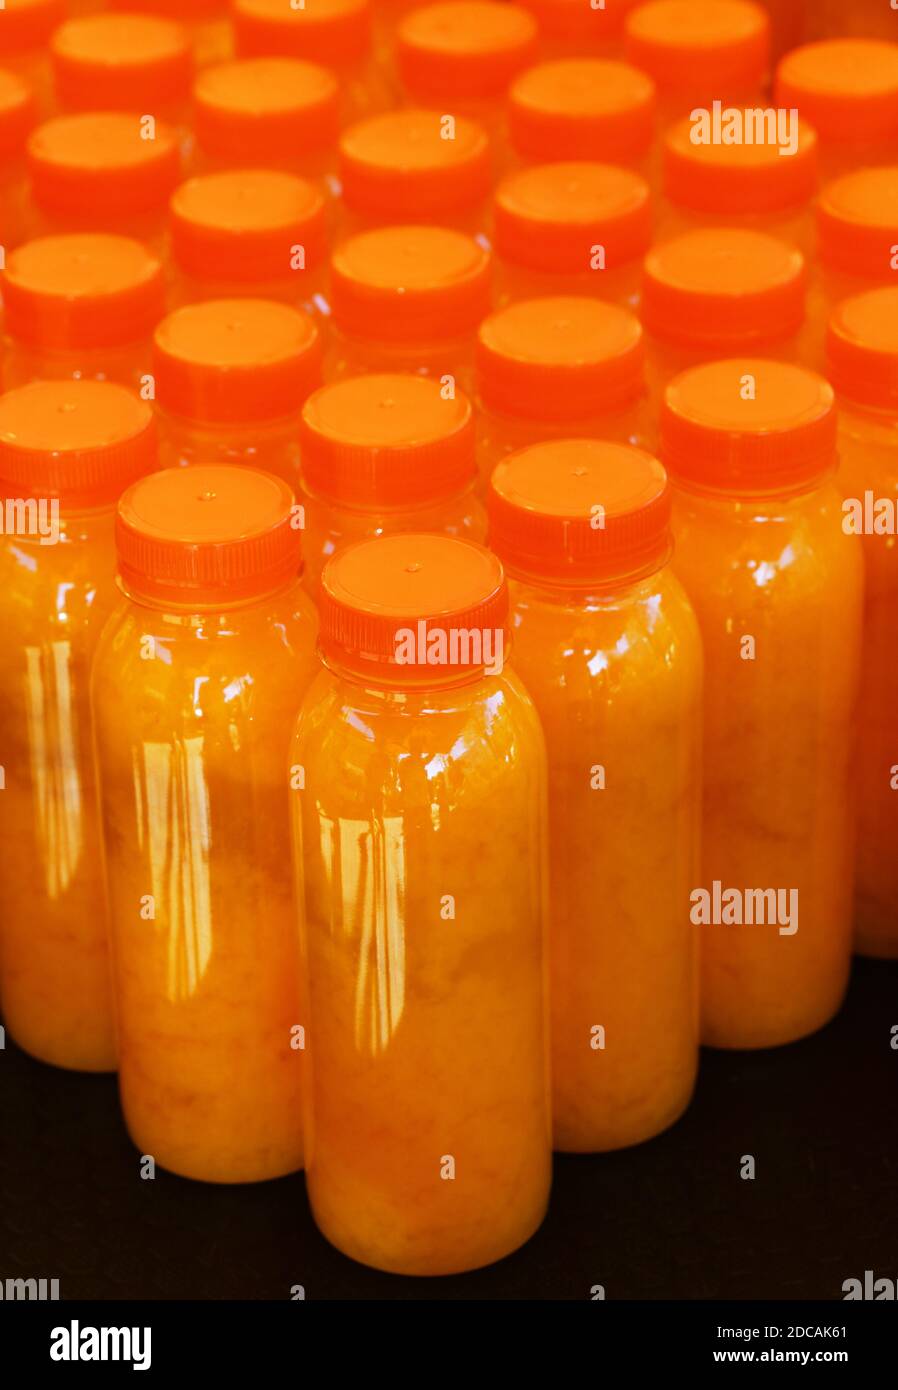 https://c8.alamy.com/comp/2DCAK61/close-up-many-plastic-bottles-of-fresh-orange-juice-at-retail-display-high-angle-view-2DCAK61.jpg